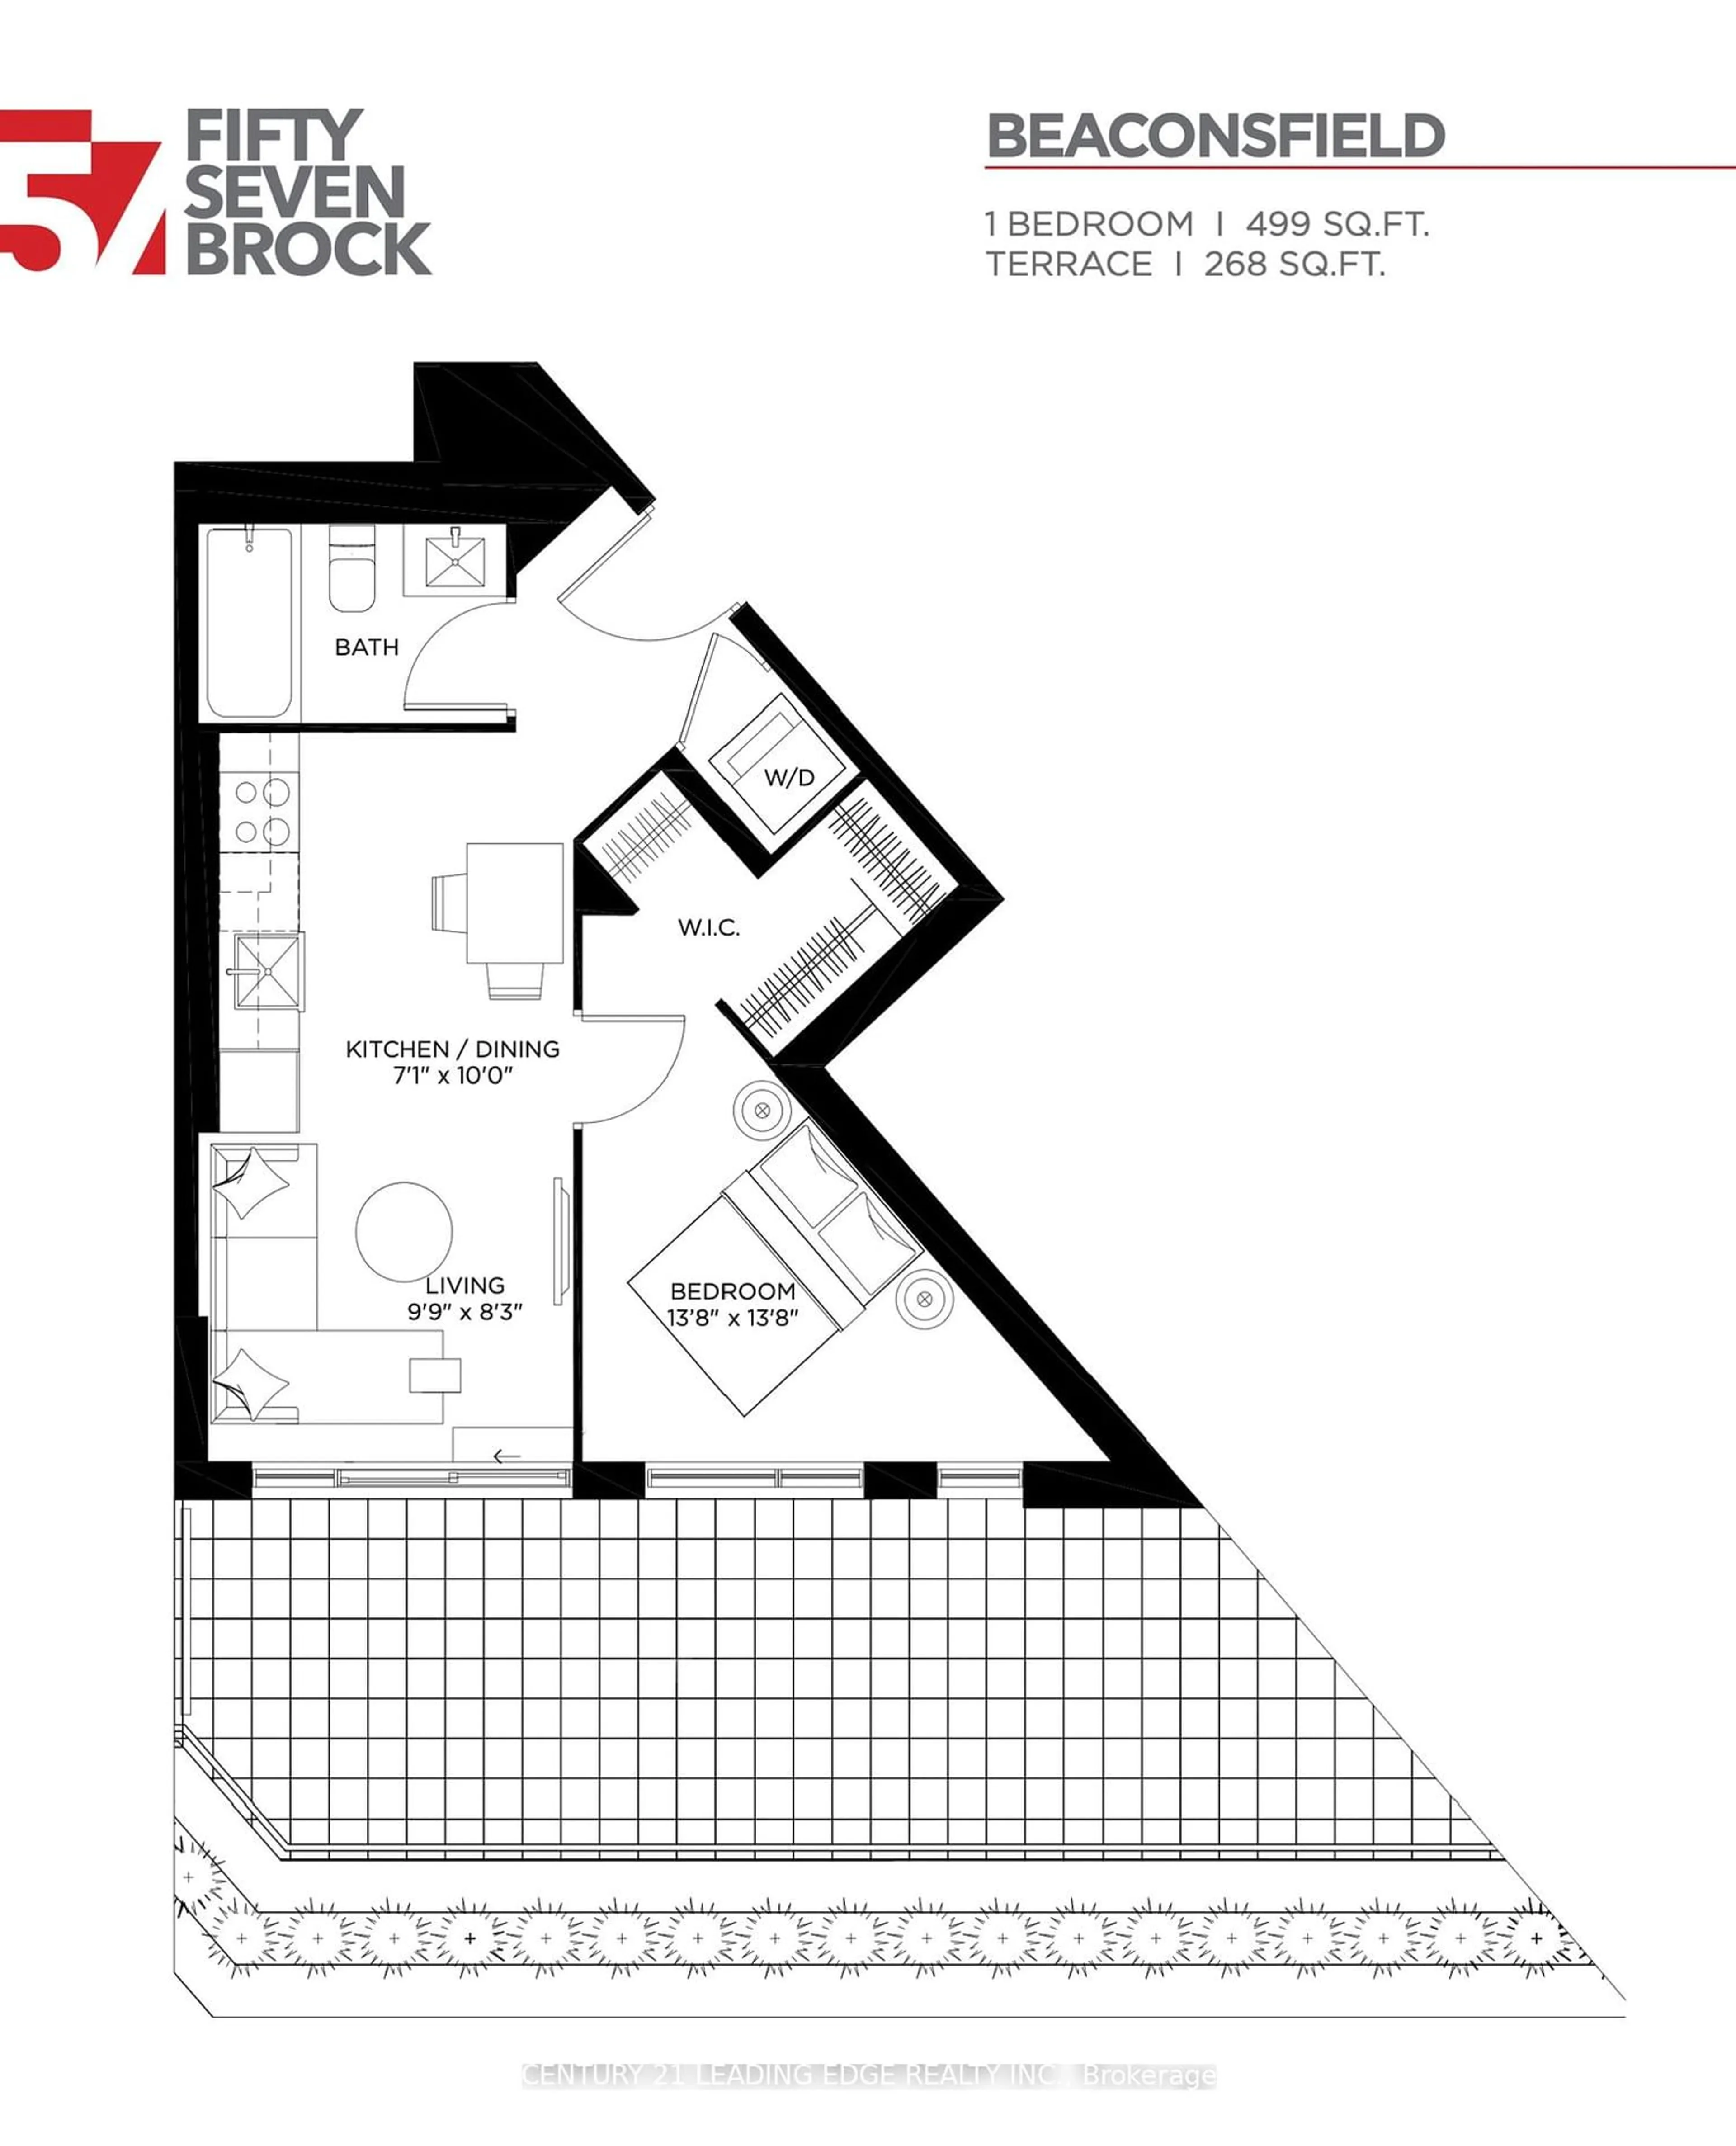 Floor plan for 57 Brock Ave #705, Toronto Ontario M6K 0H3